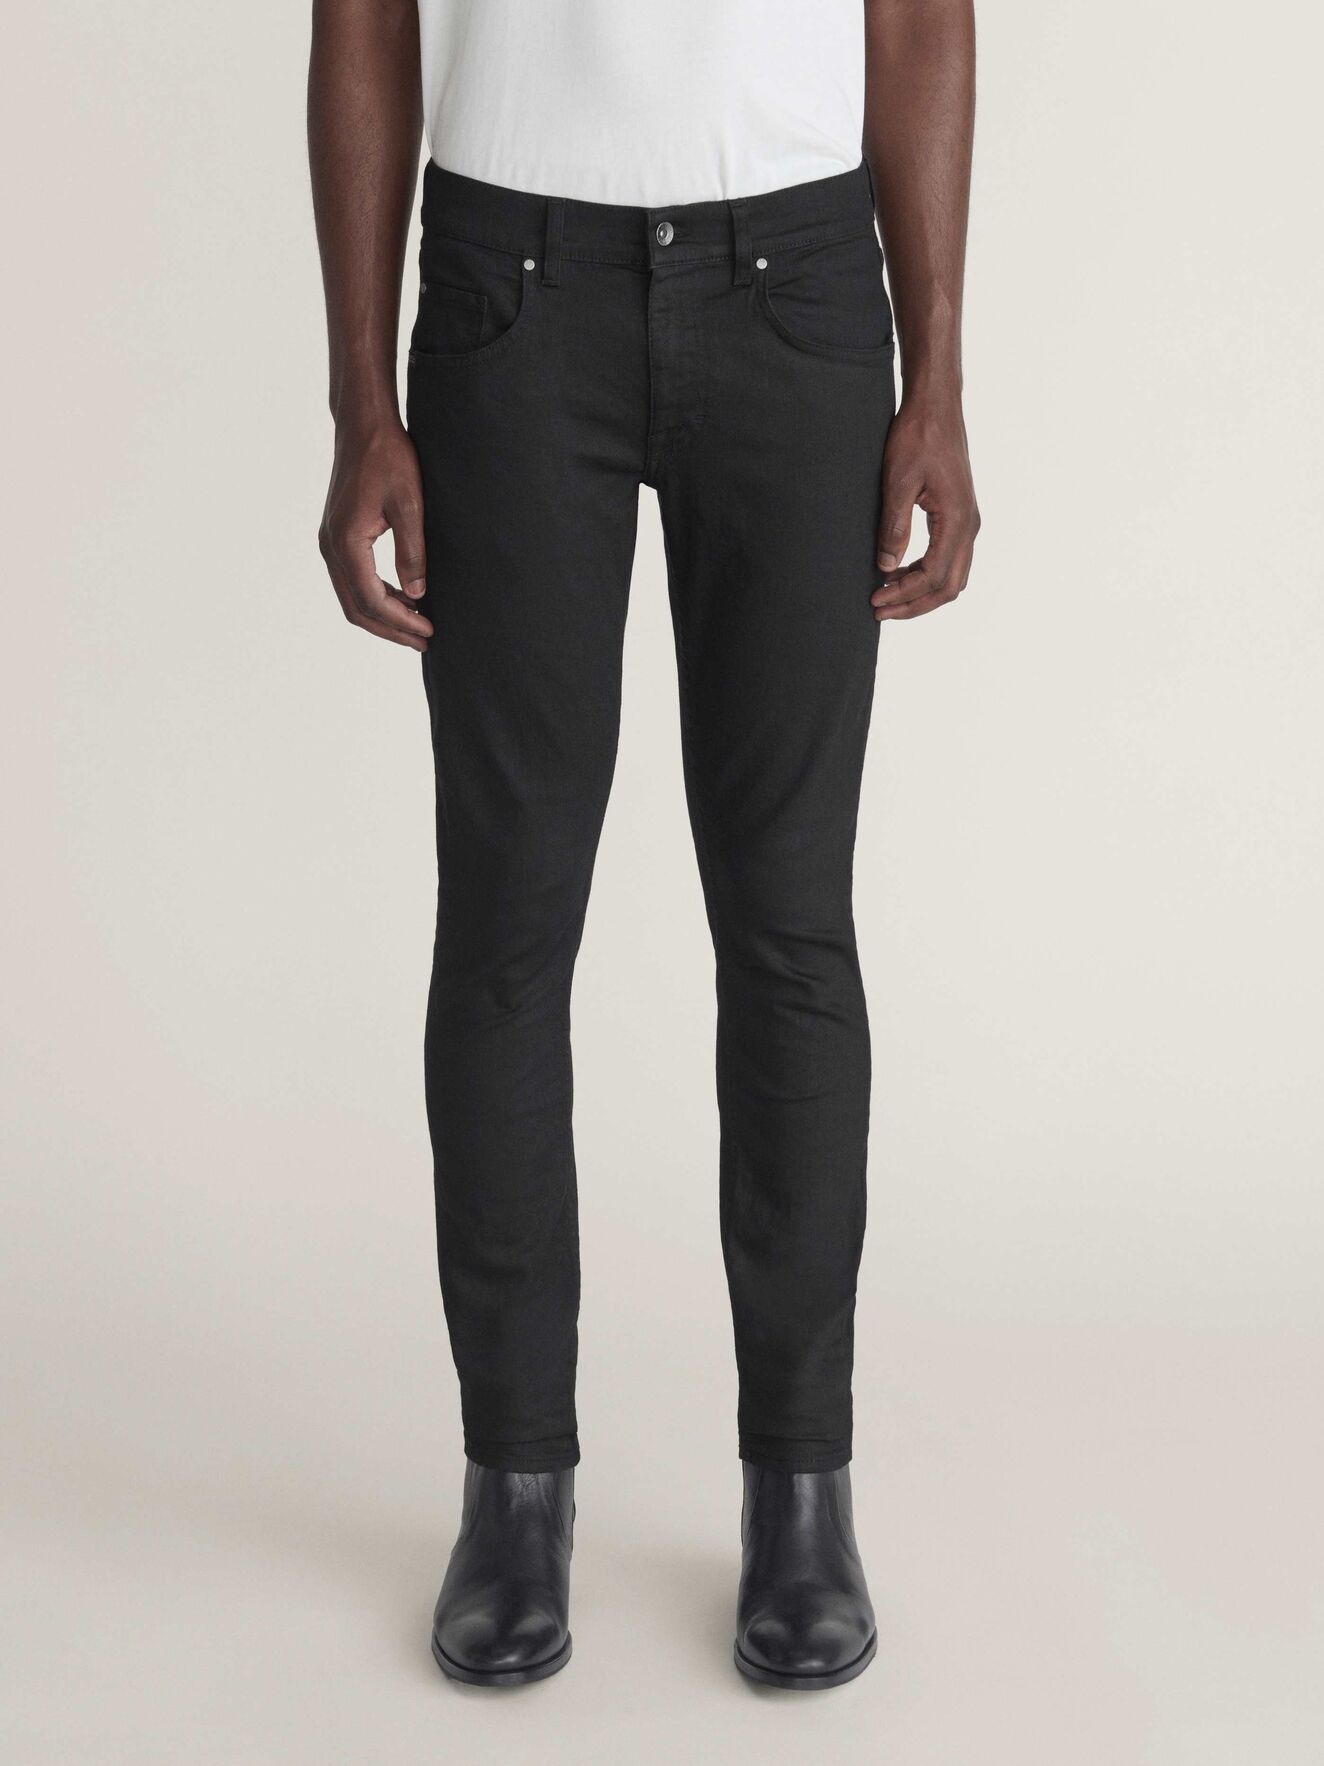 Tiger Sweden / Jeans: Slim Jeans Blackened - Black Menswear